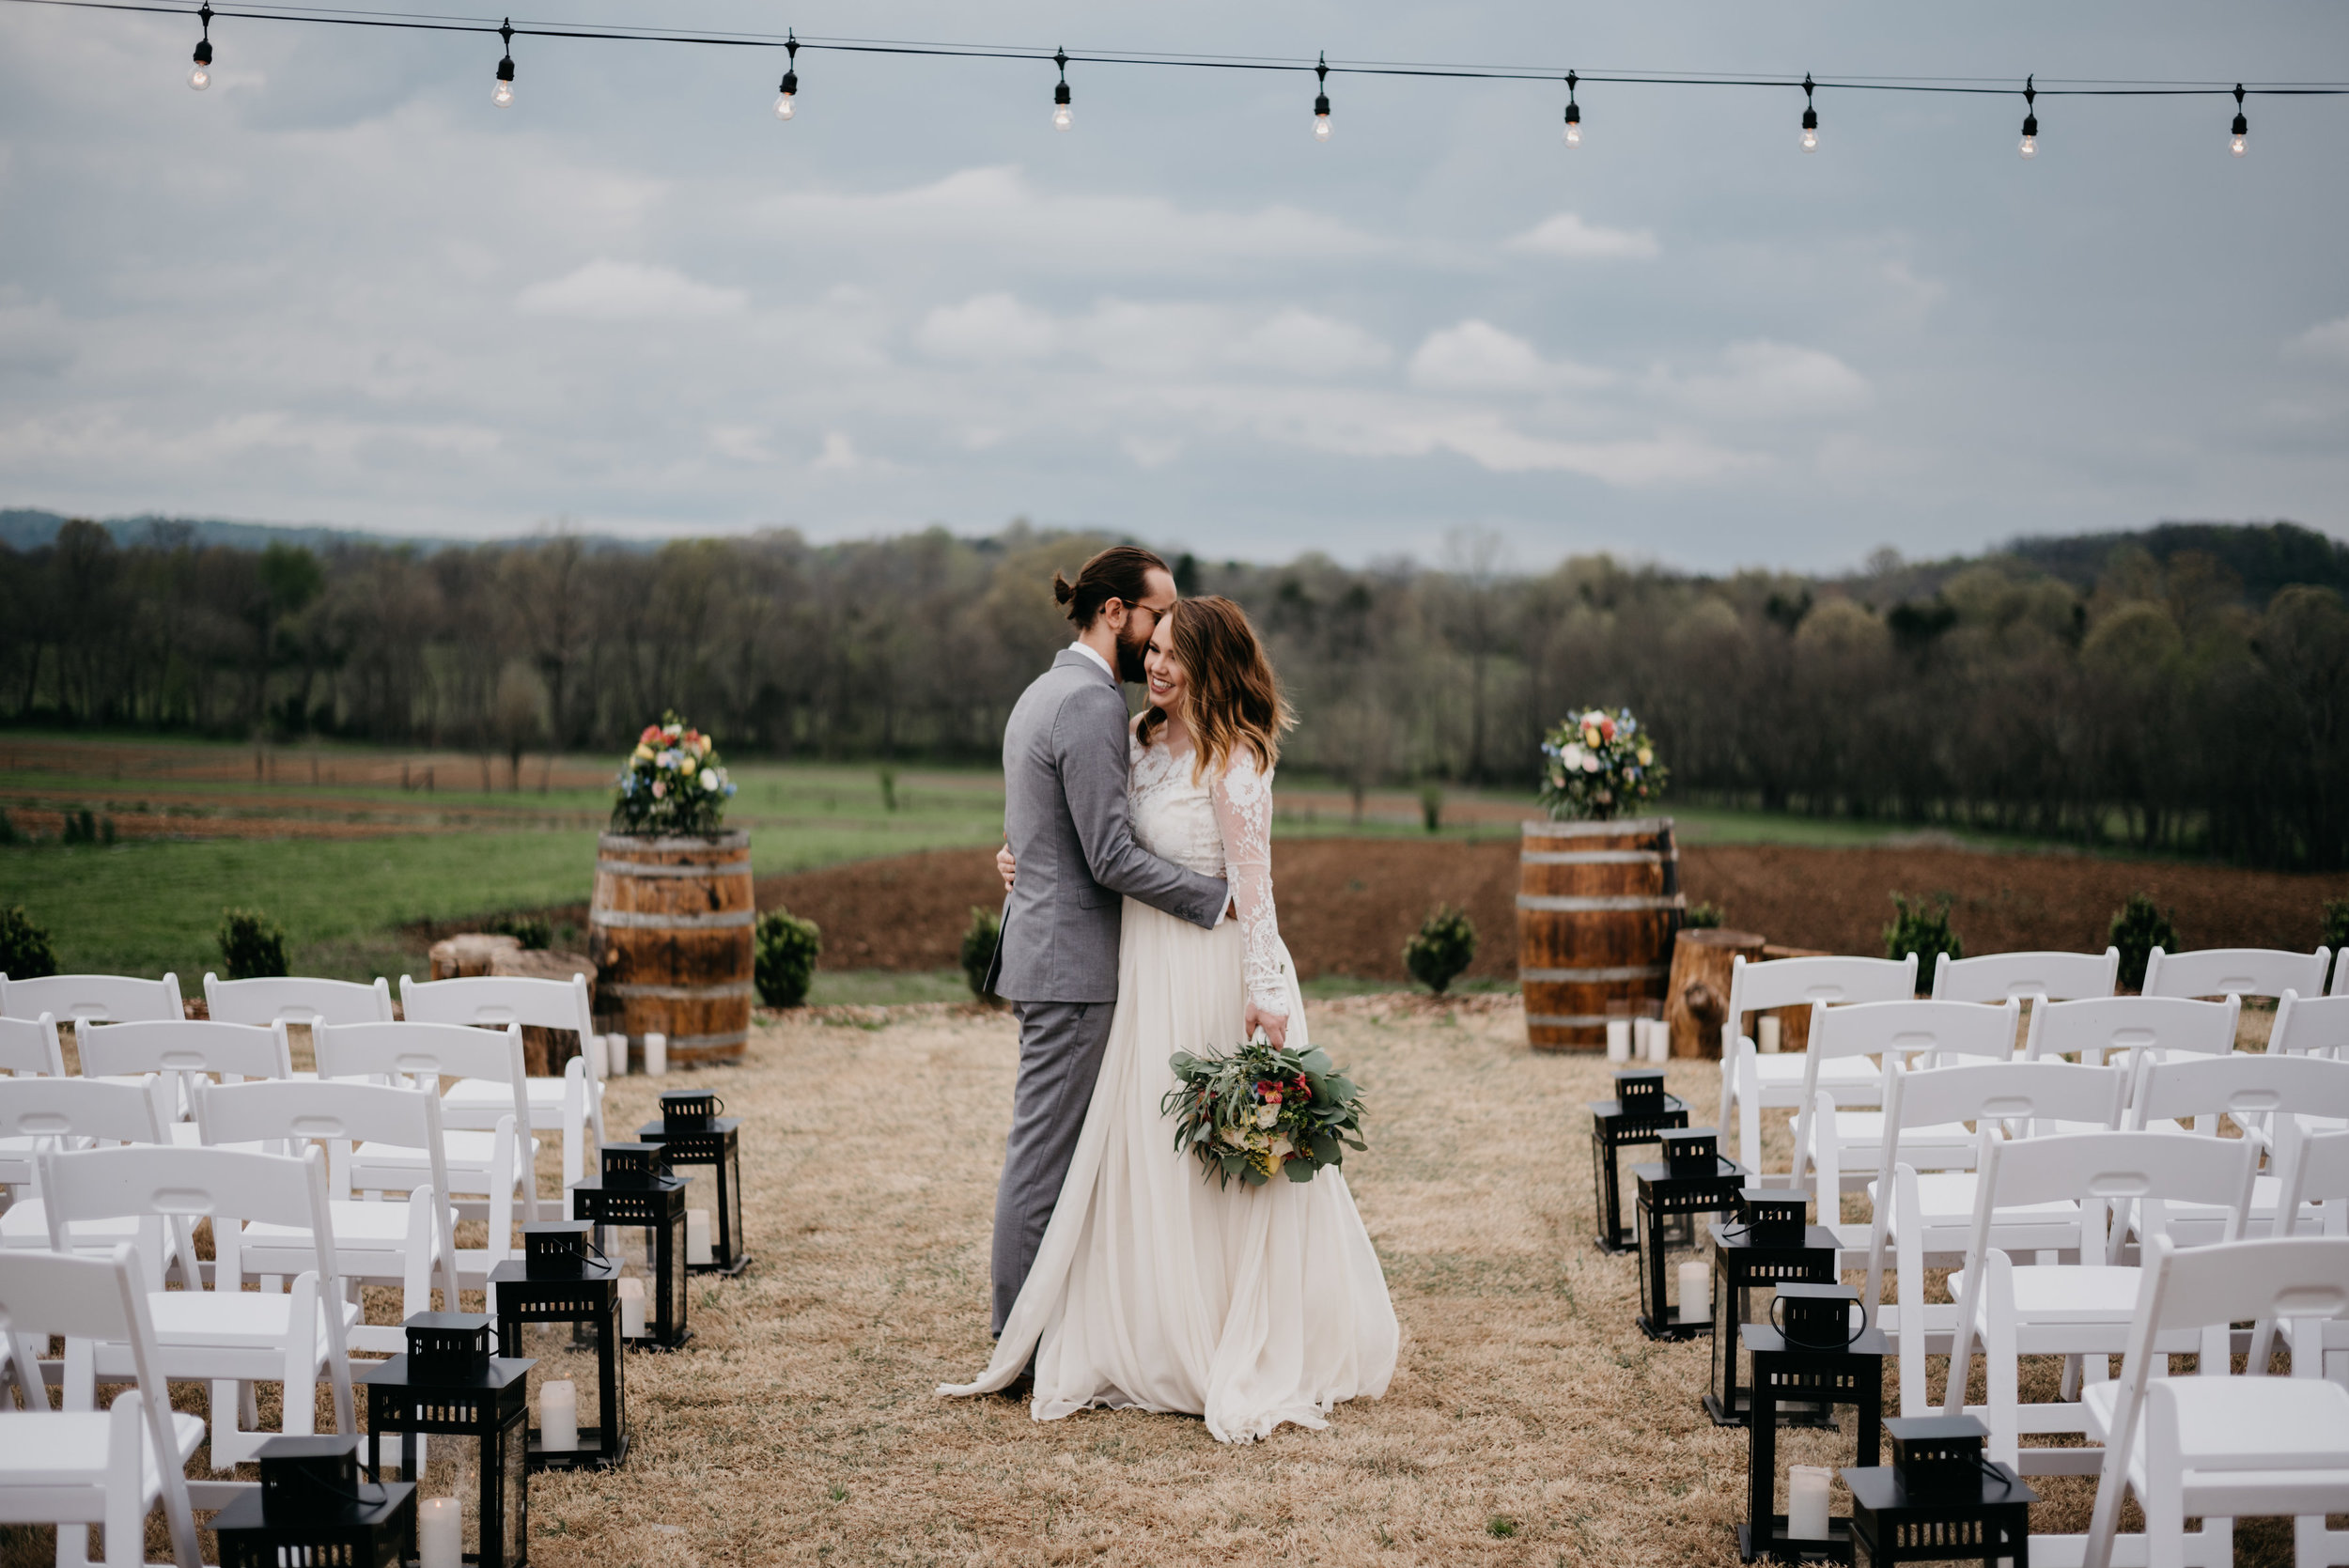 Allenbrooke Farms Styled Wedding | Spring Hill, TN